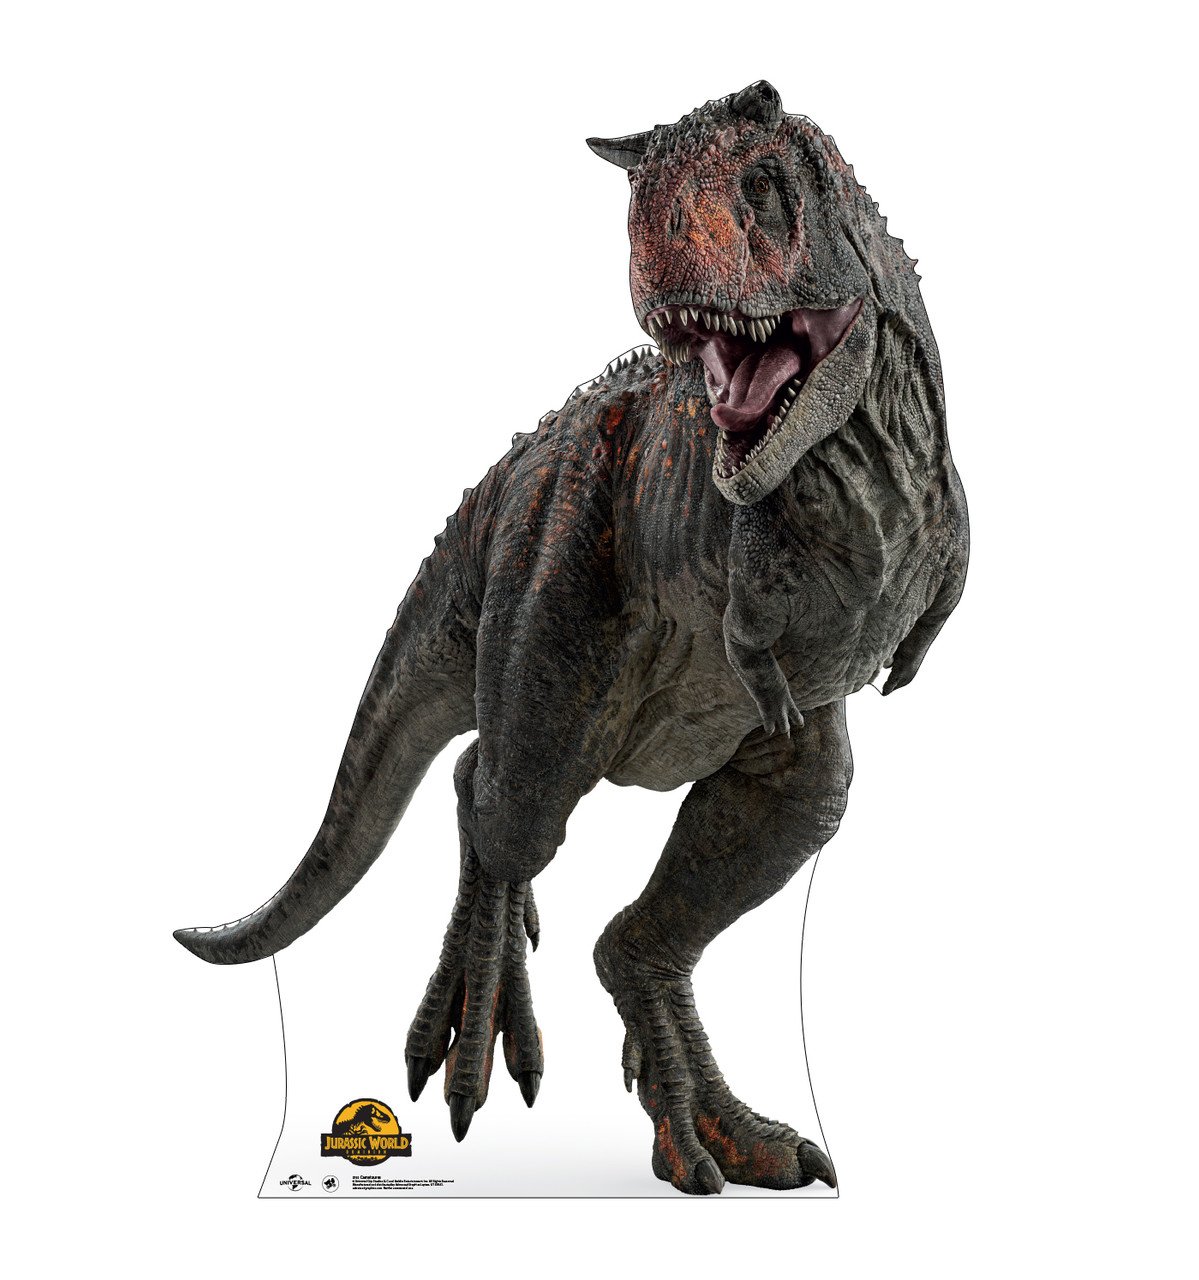 Life-size Cardboard Standee of Camotaurus from the movie Jurassic World Dominion.